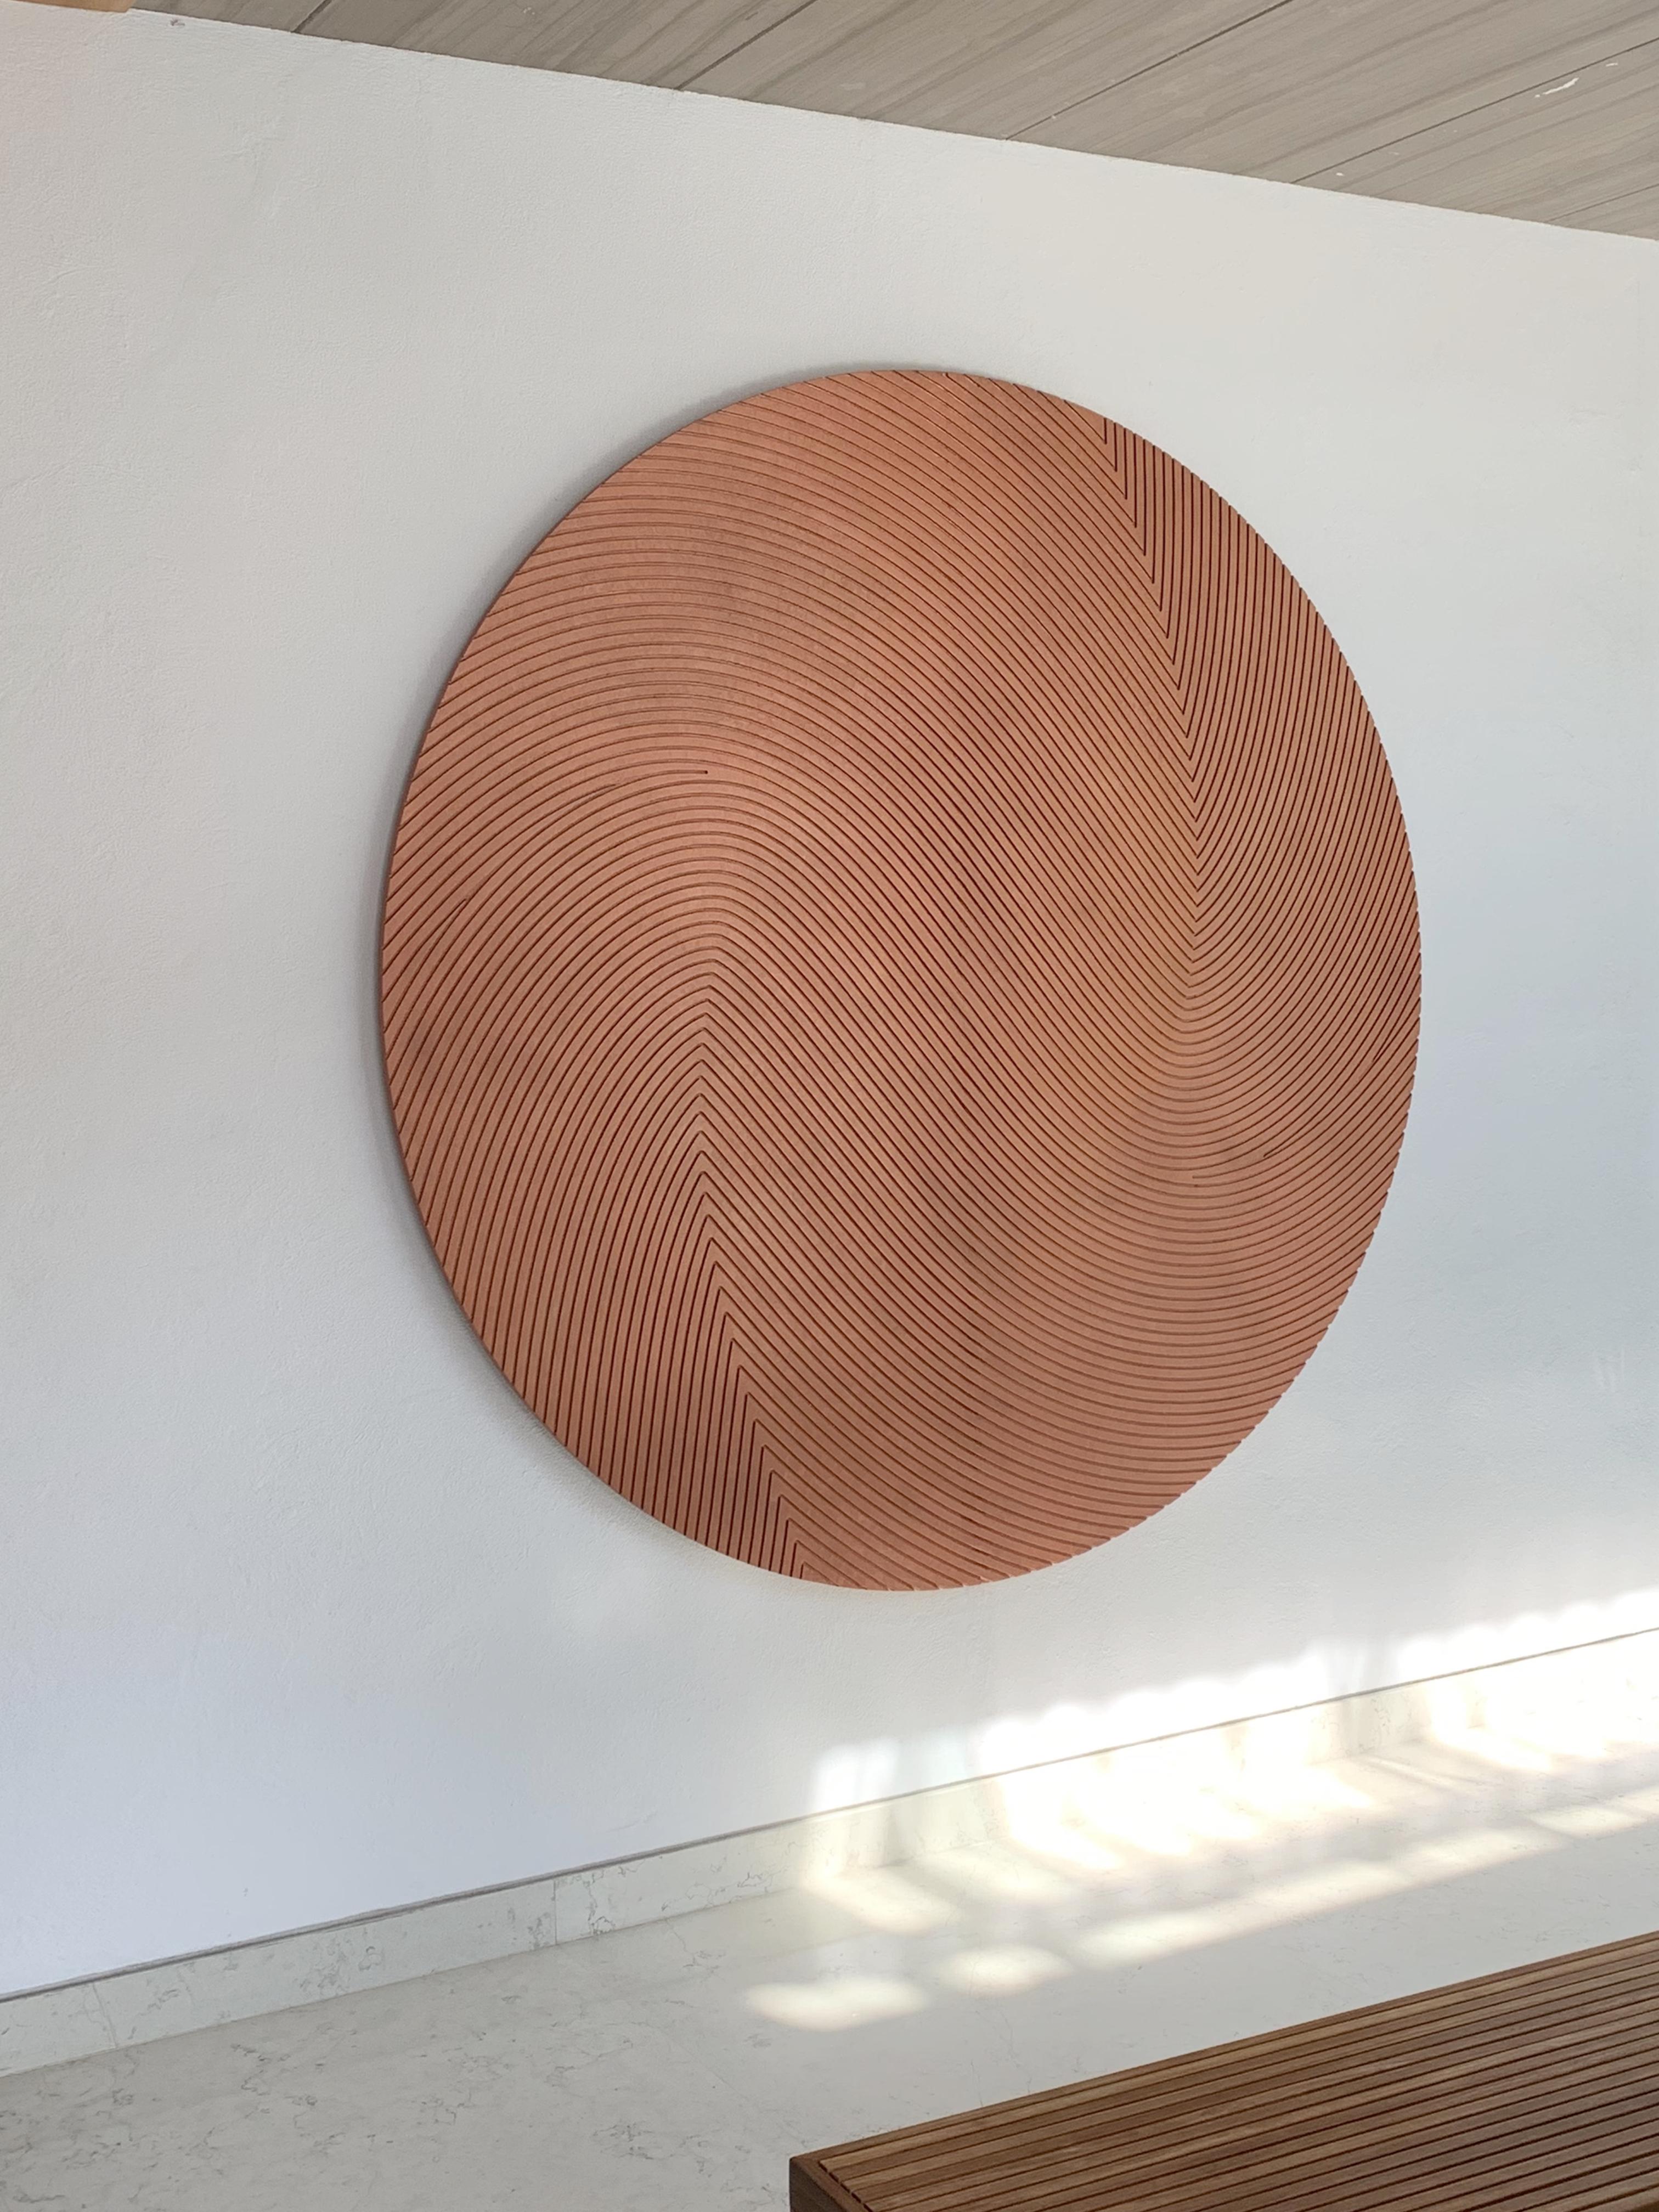 Elegant Work of Art Ideal for Any Space, Copper Encounter - Contemporary Sculpture by Arozarena De La Fuente